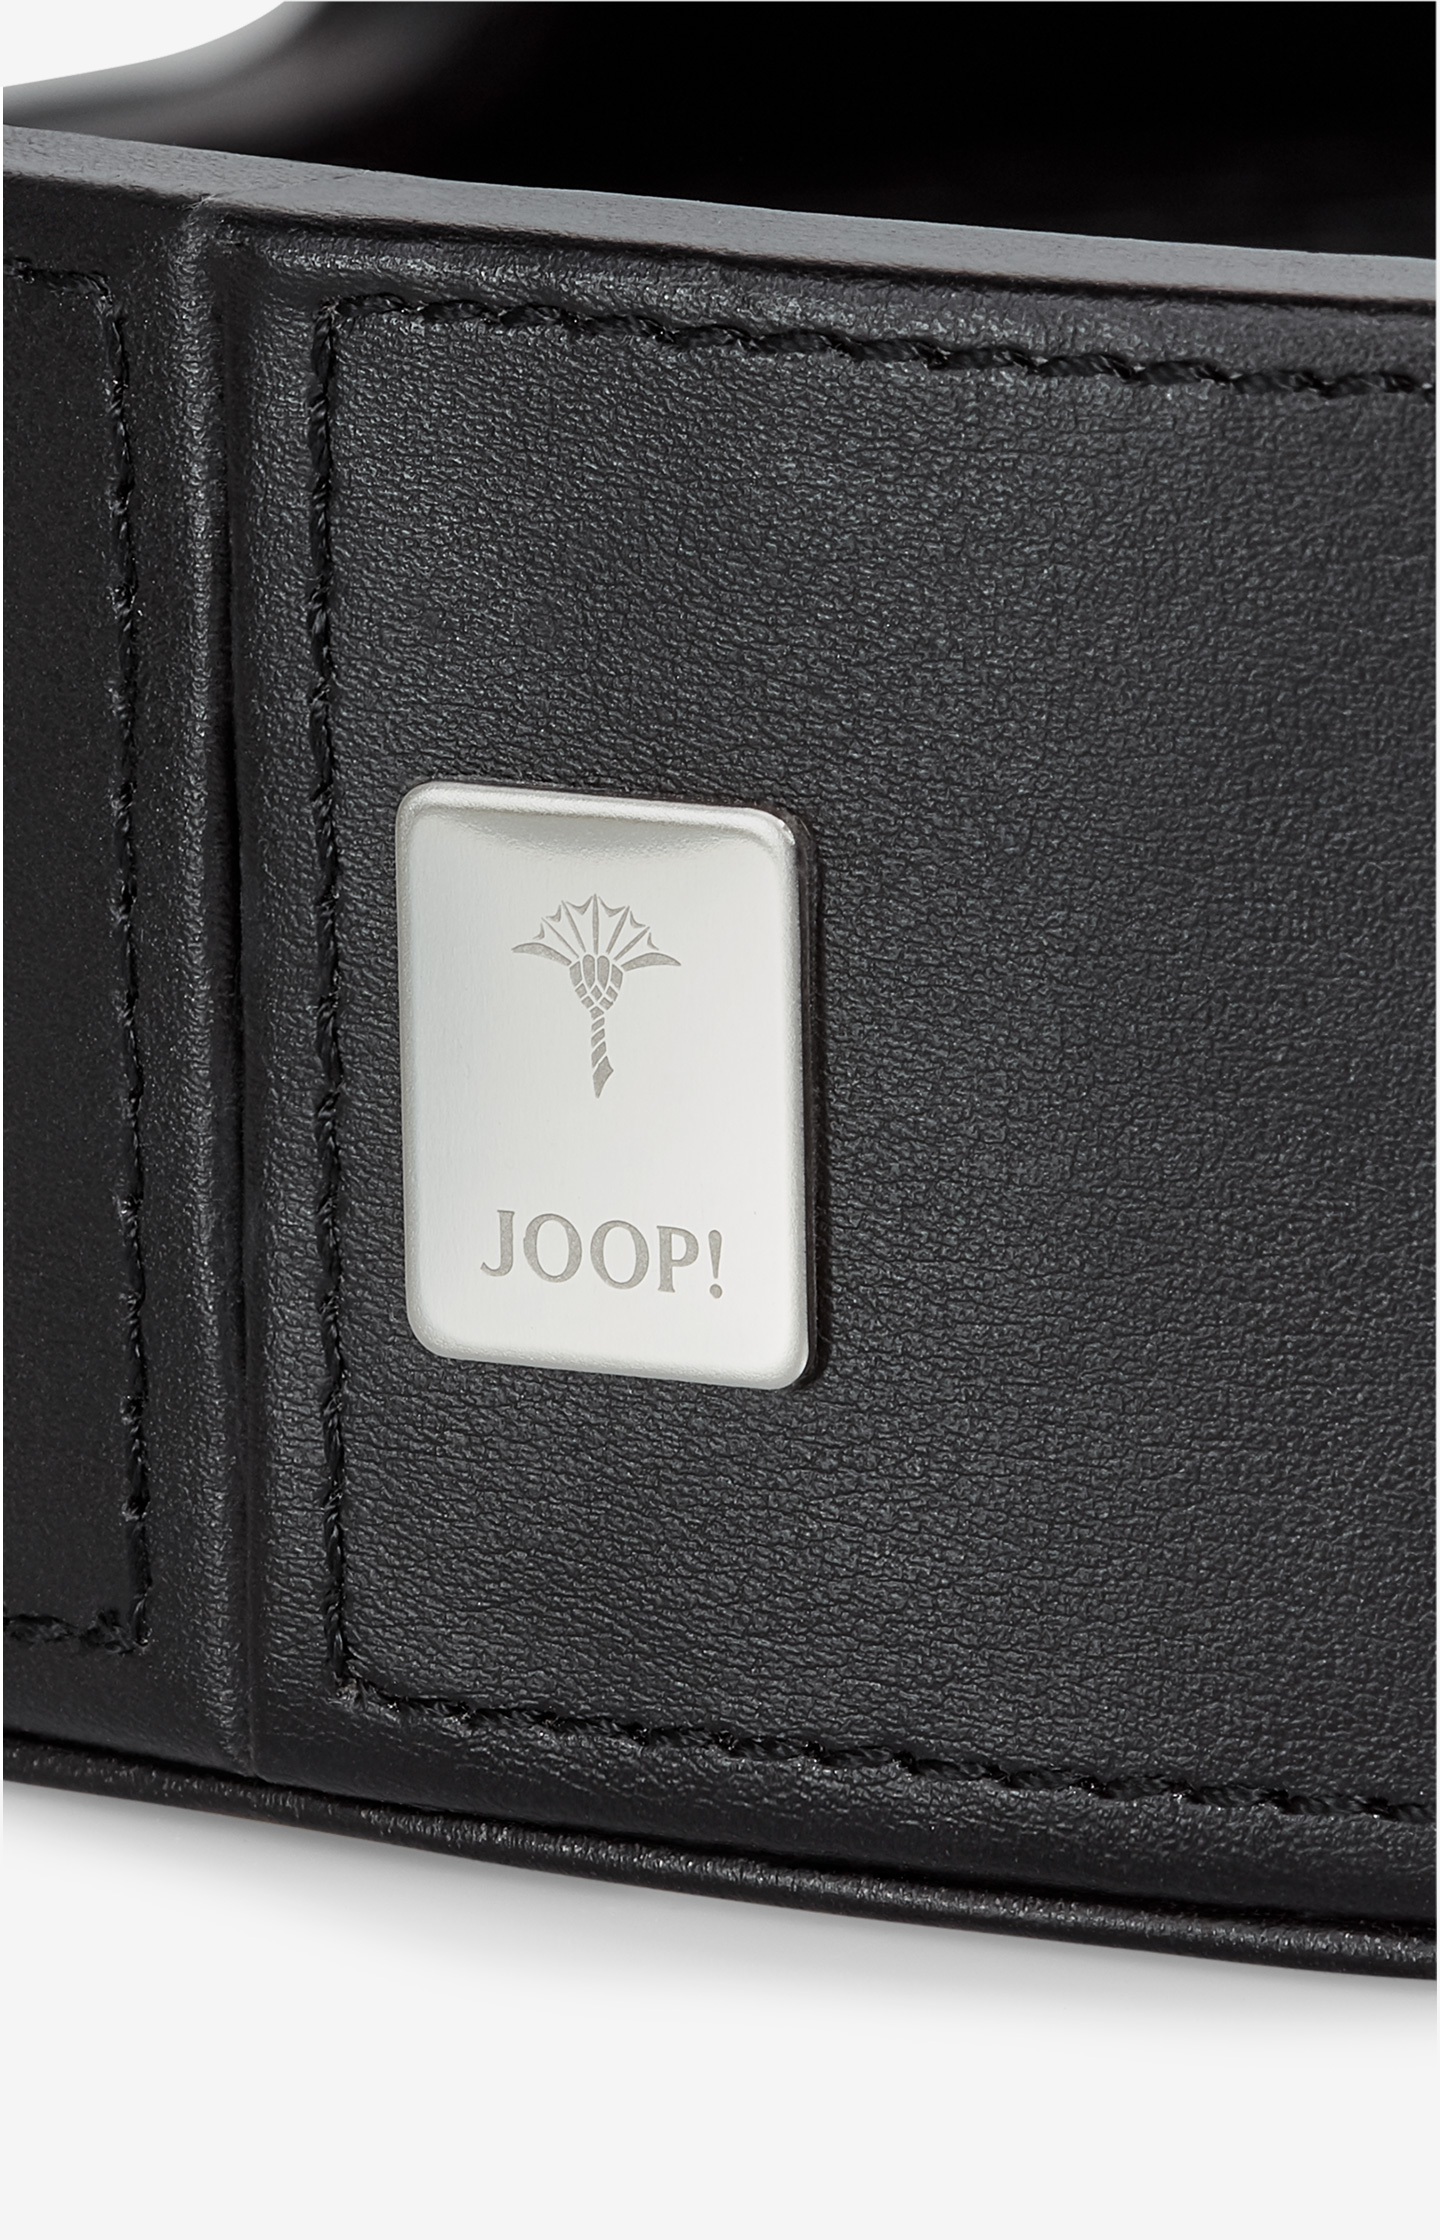 JOOP! Homeline - Rundes - Online-Shop im Schwarz, Tablett in klein JOOP